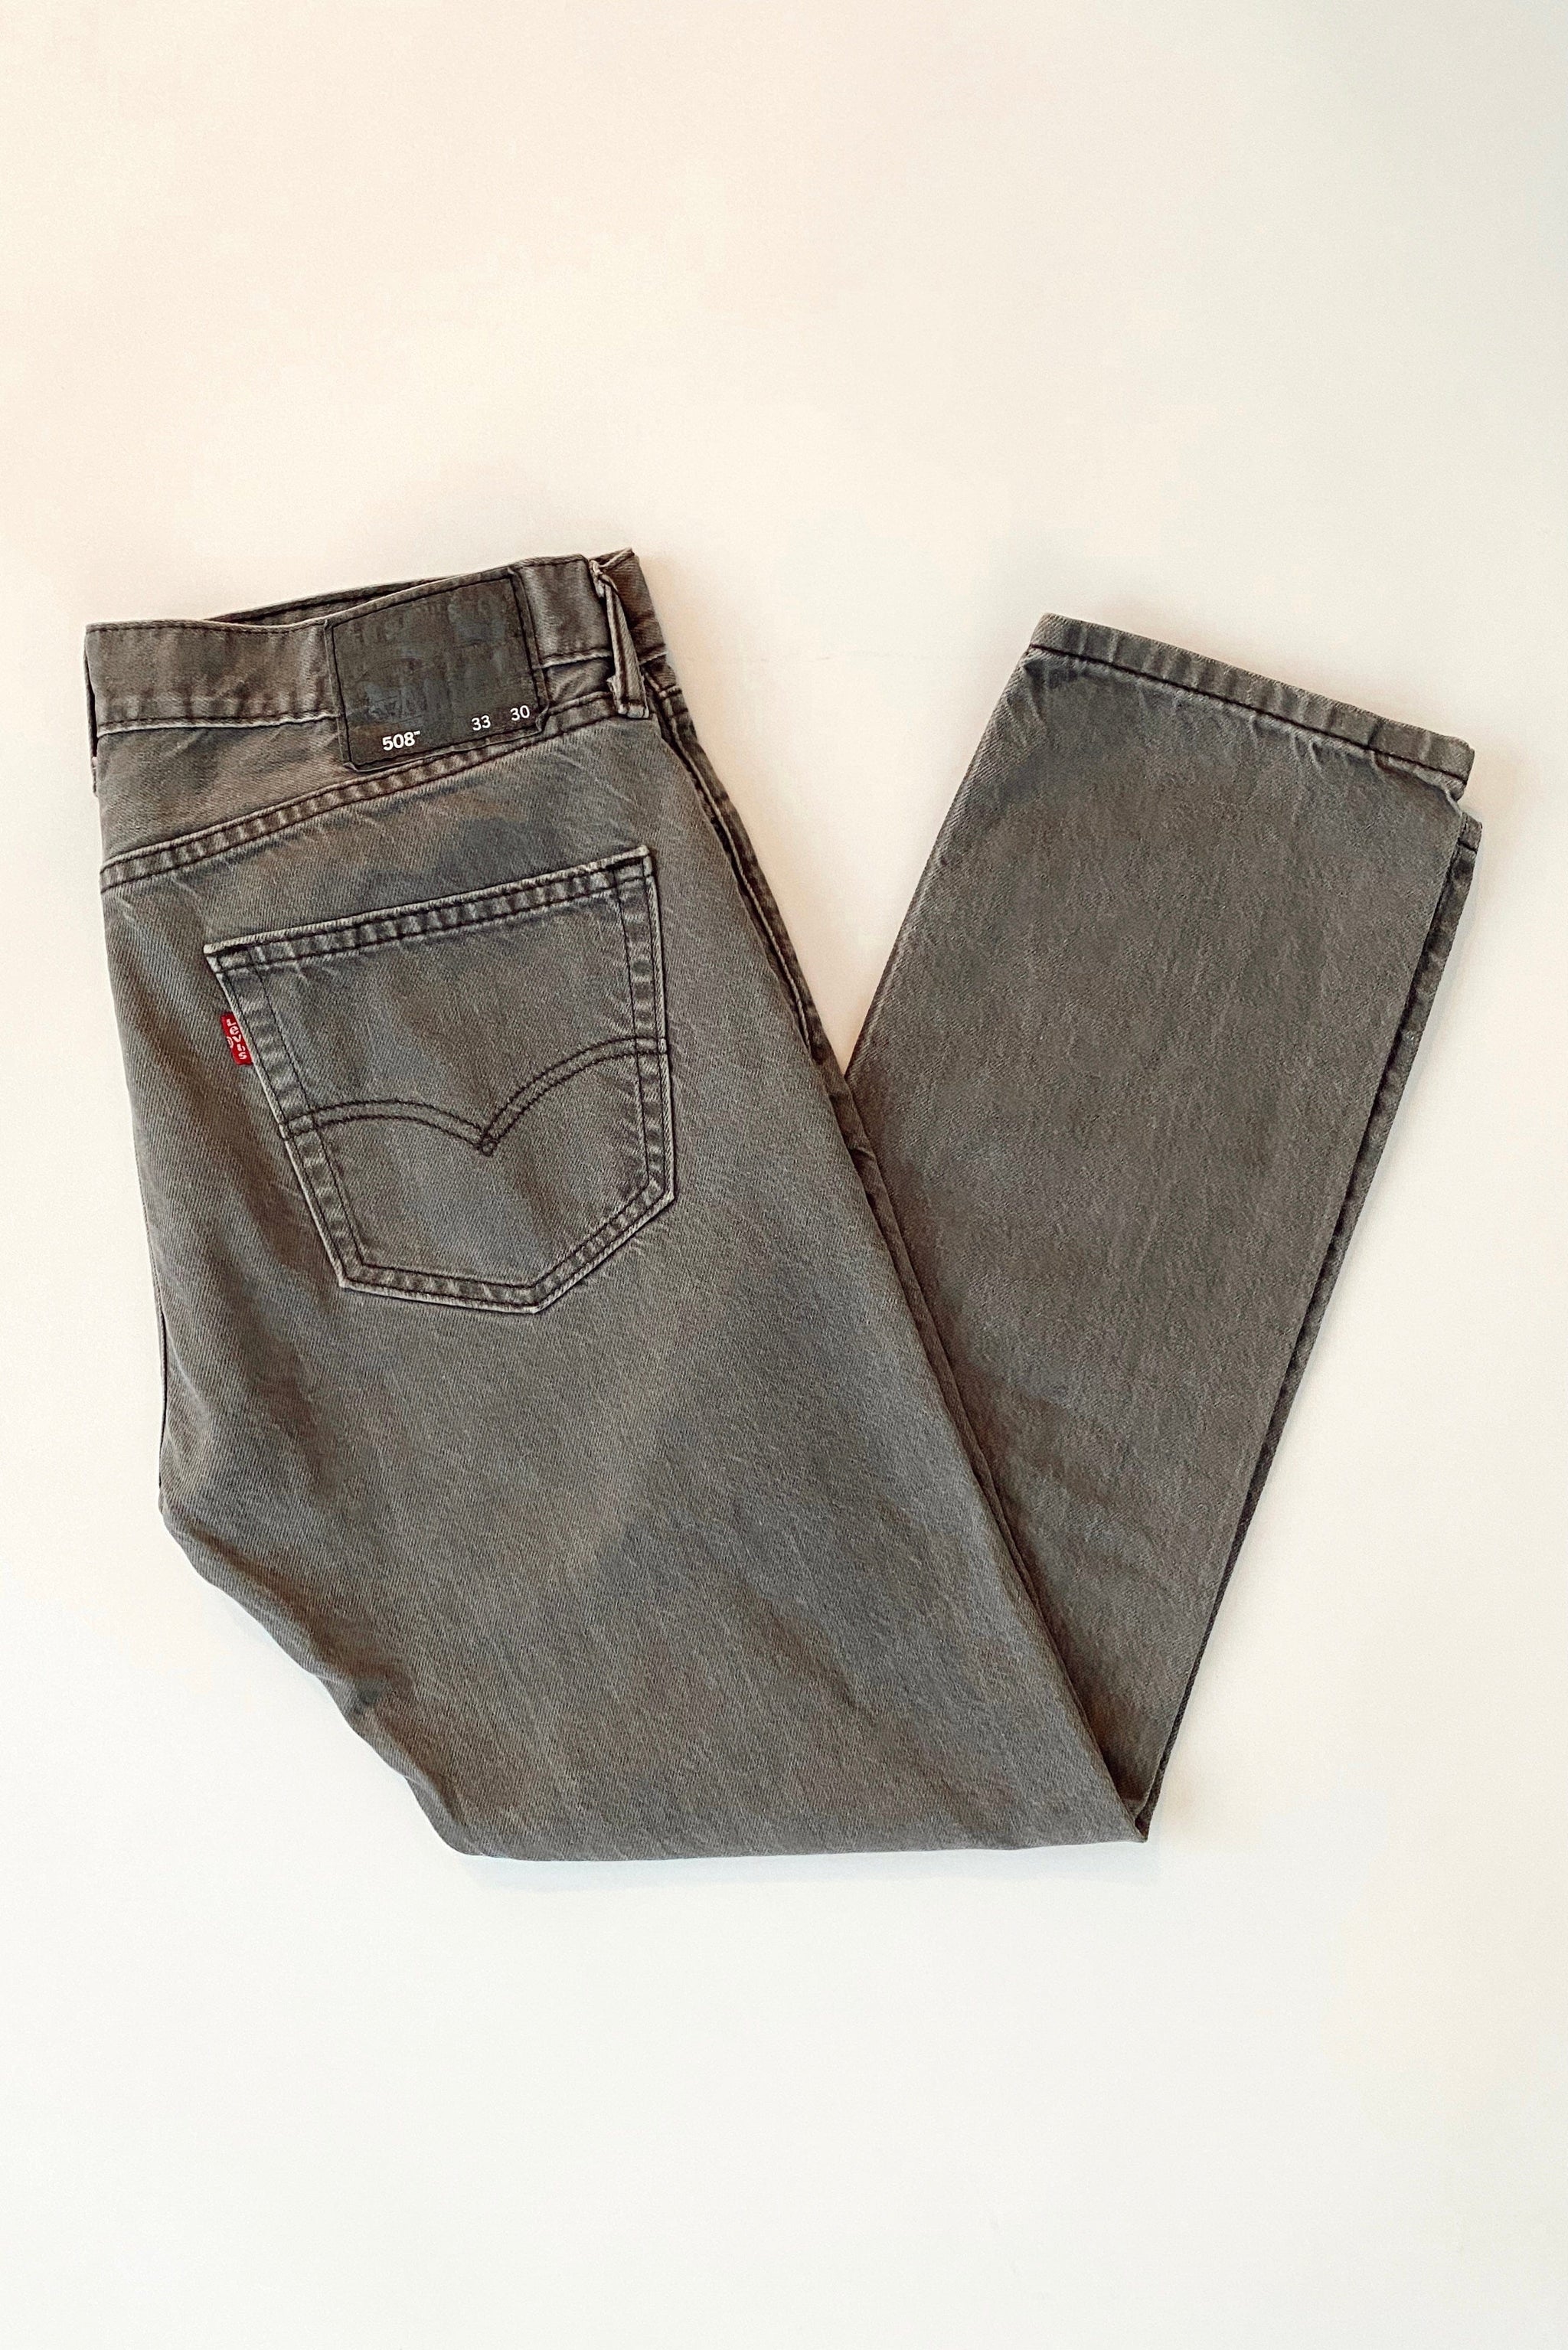 Preloved Levi's 508 Light Gray Jeans / Size 32 - COUTONIC